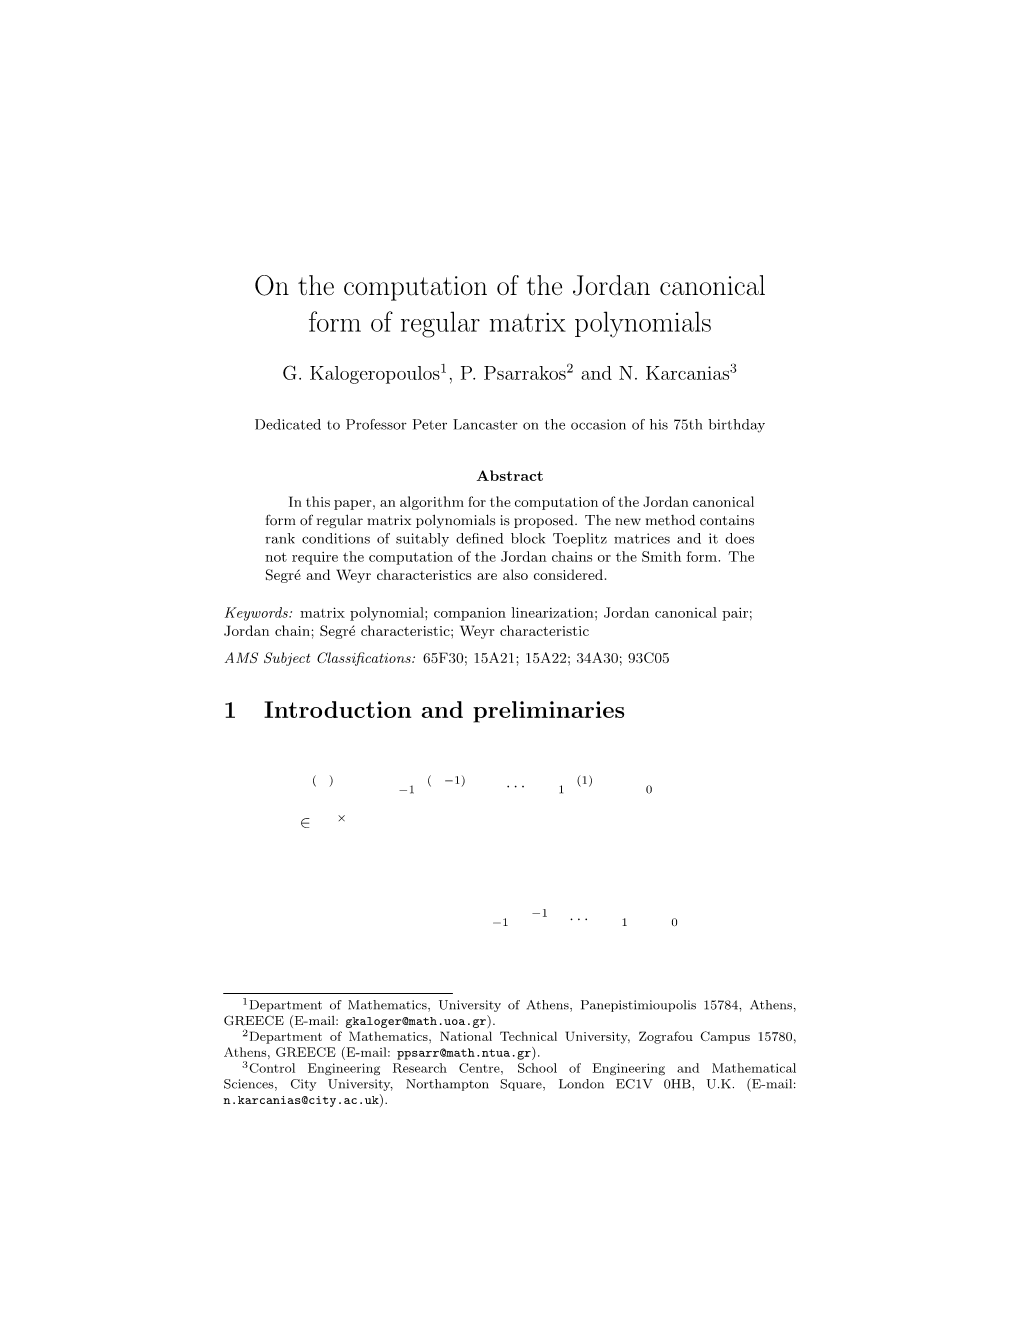 On the Computation of the Jordan Canonical Form of Regular Matrix Polynomials